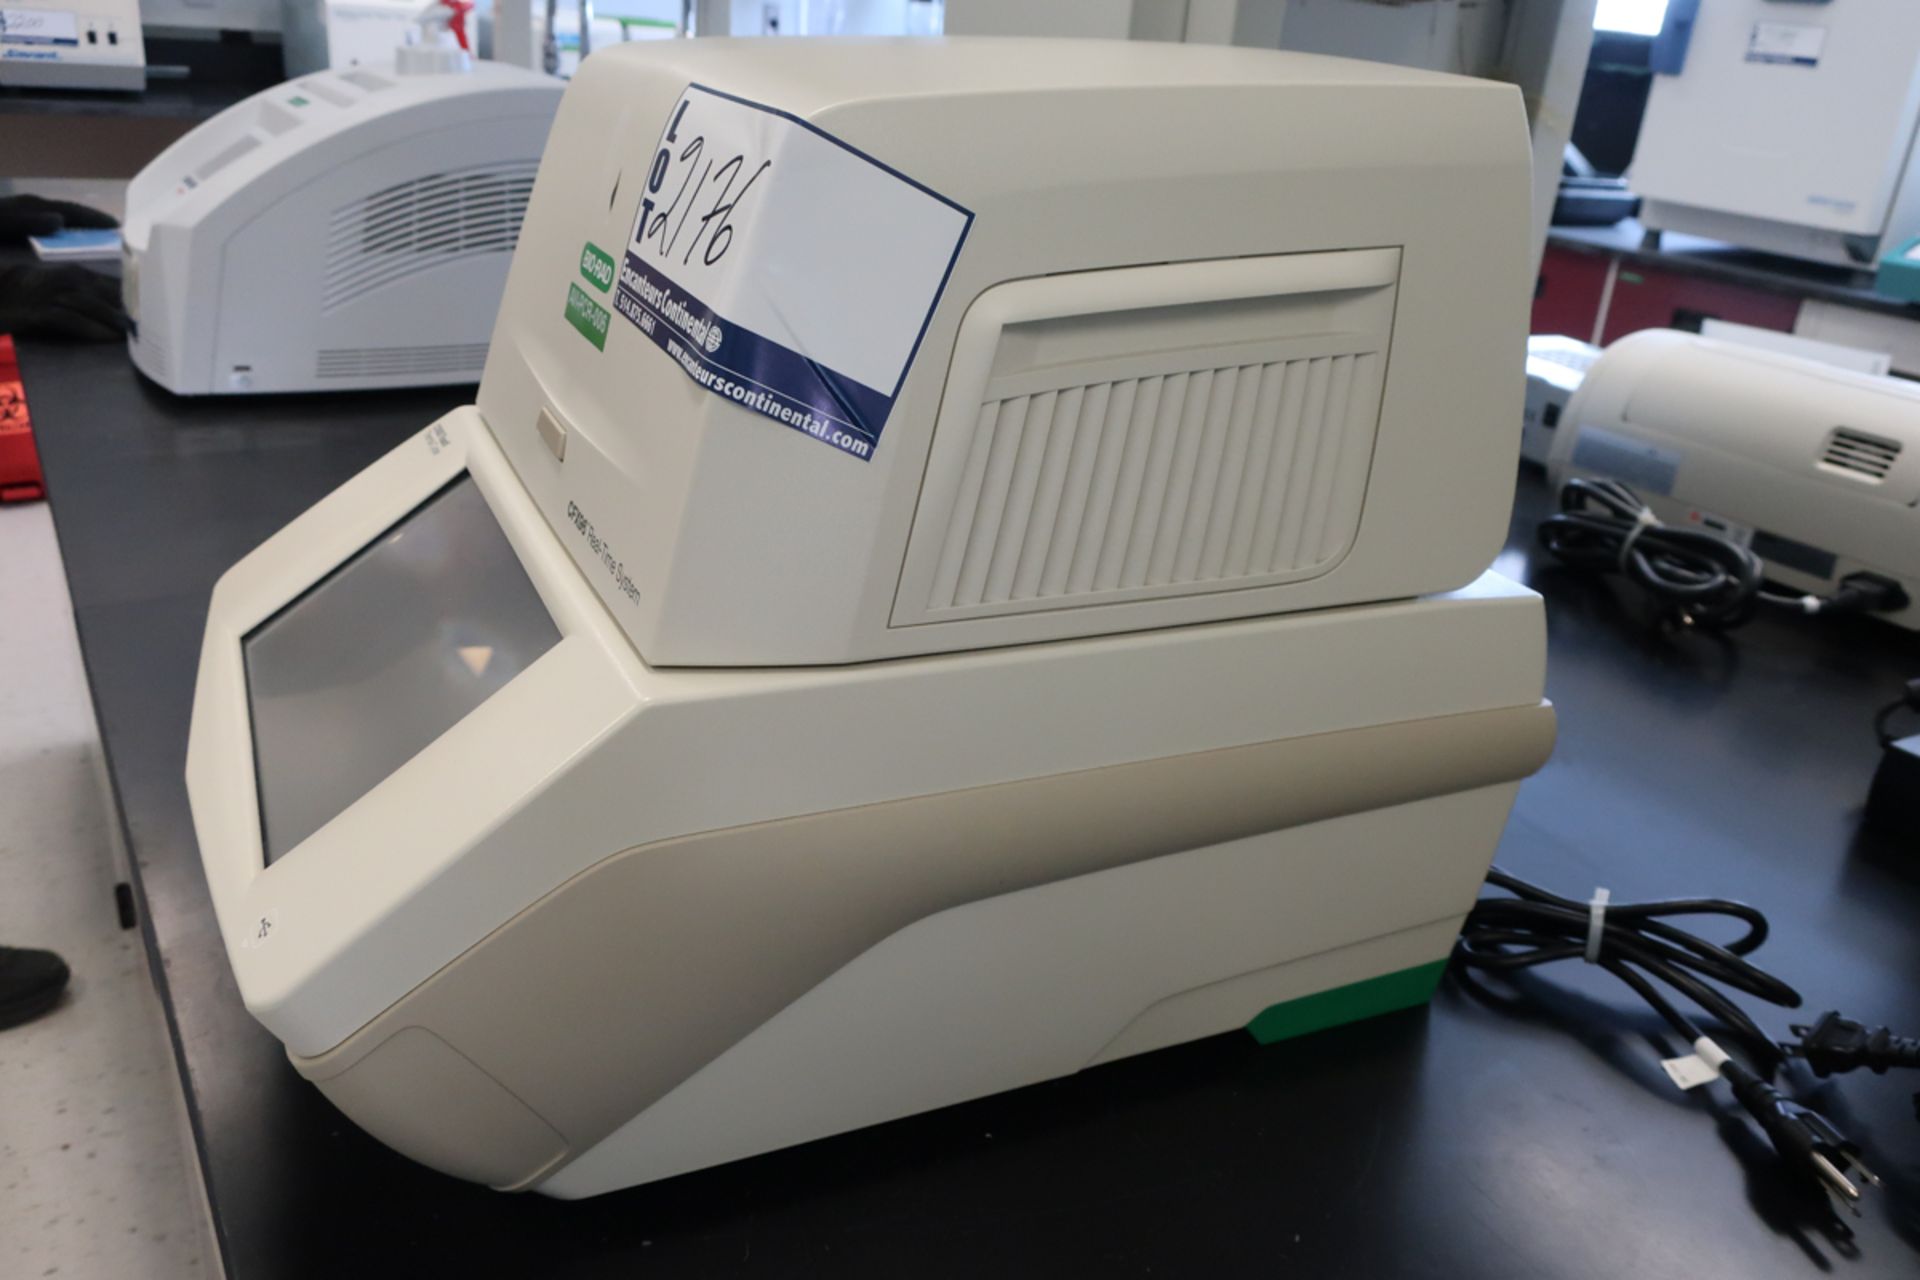 BIO-RAD CFX96 OPTICS MODULE REAL-TIME PCR DETECTOR, S/N: 785BR16080 - Image 3 of 3